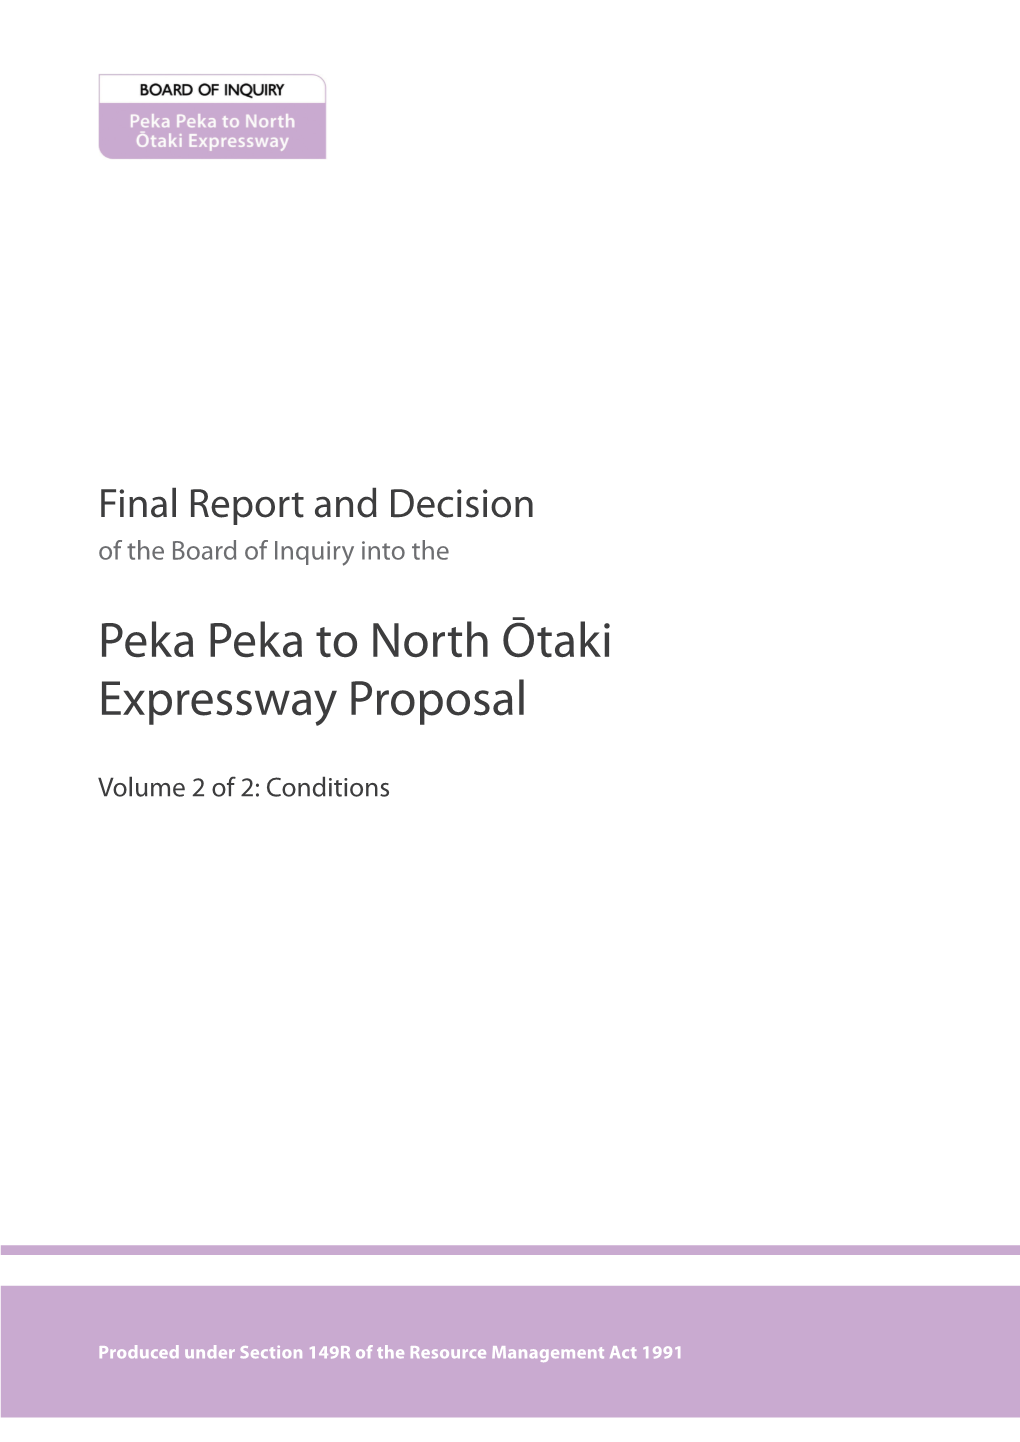 Peka Peka to North Ōtaki Expressway Proposal